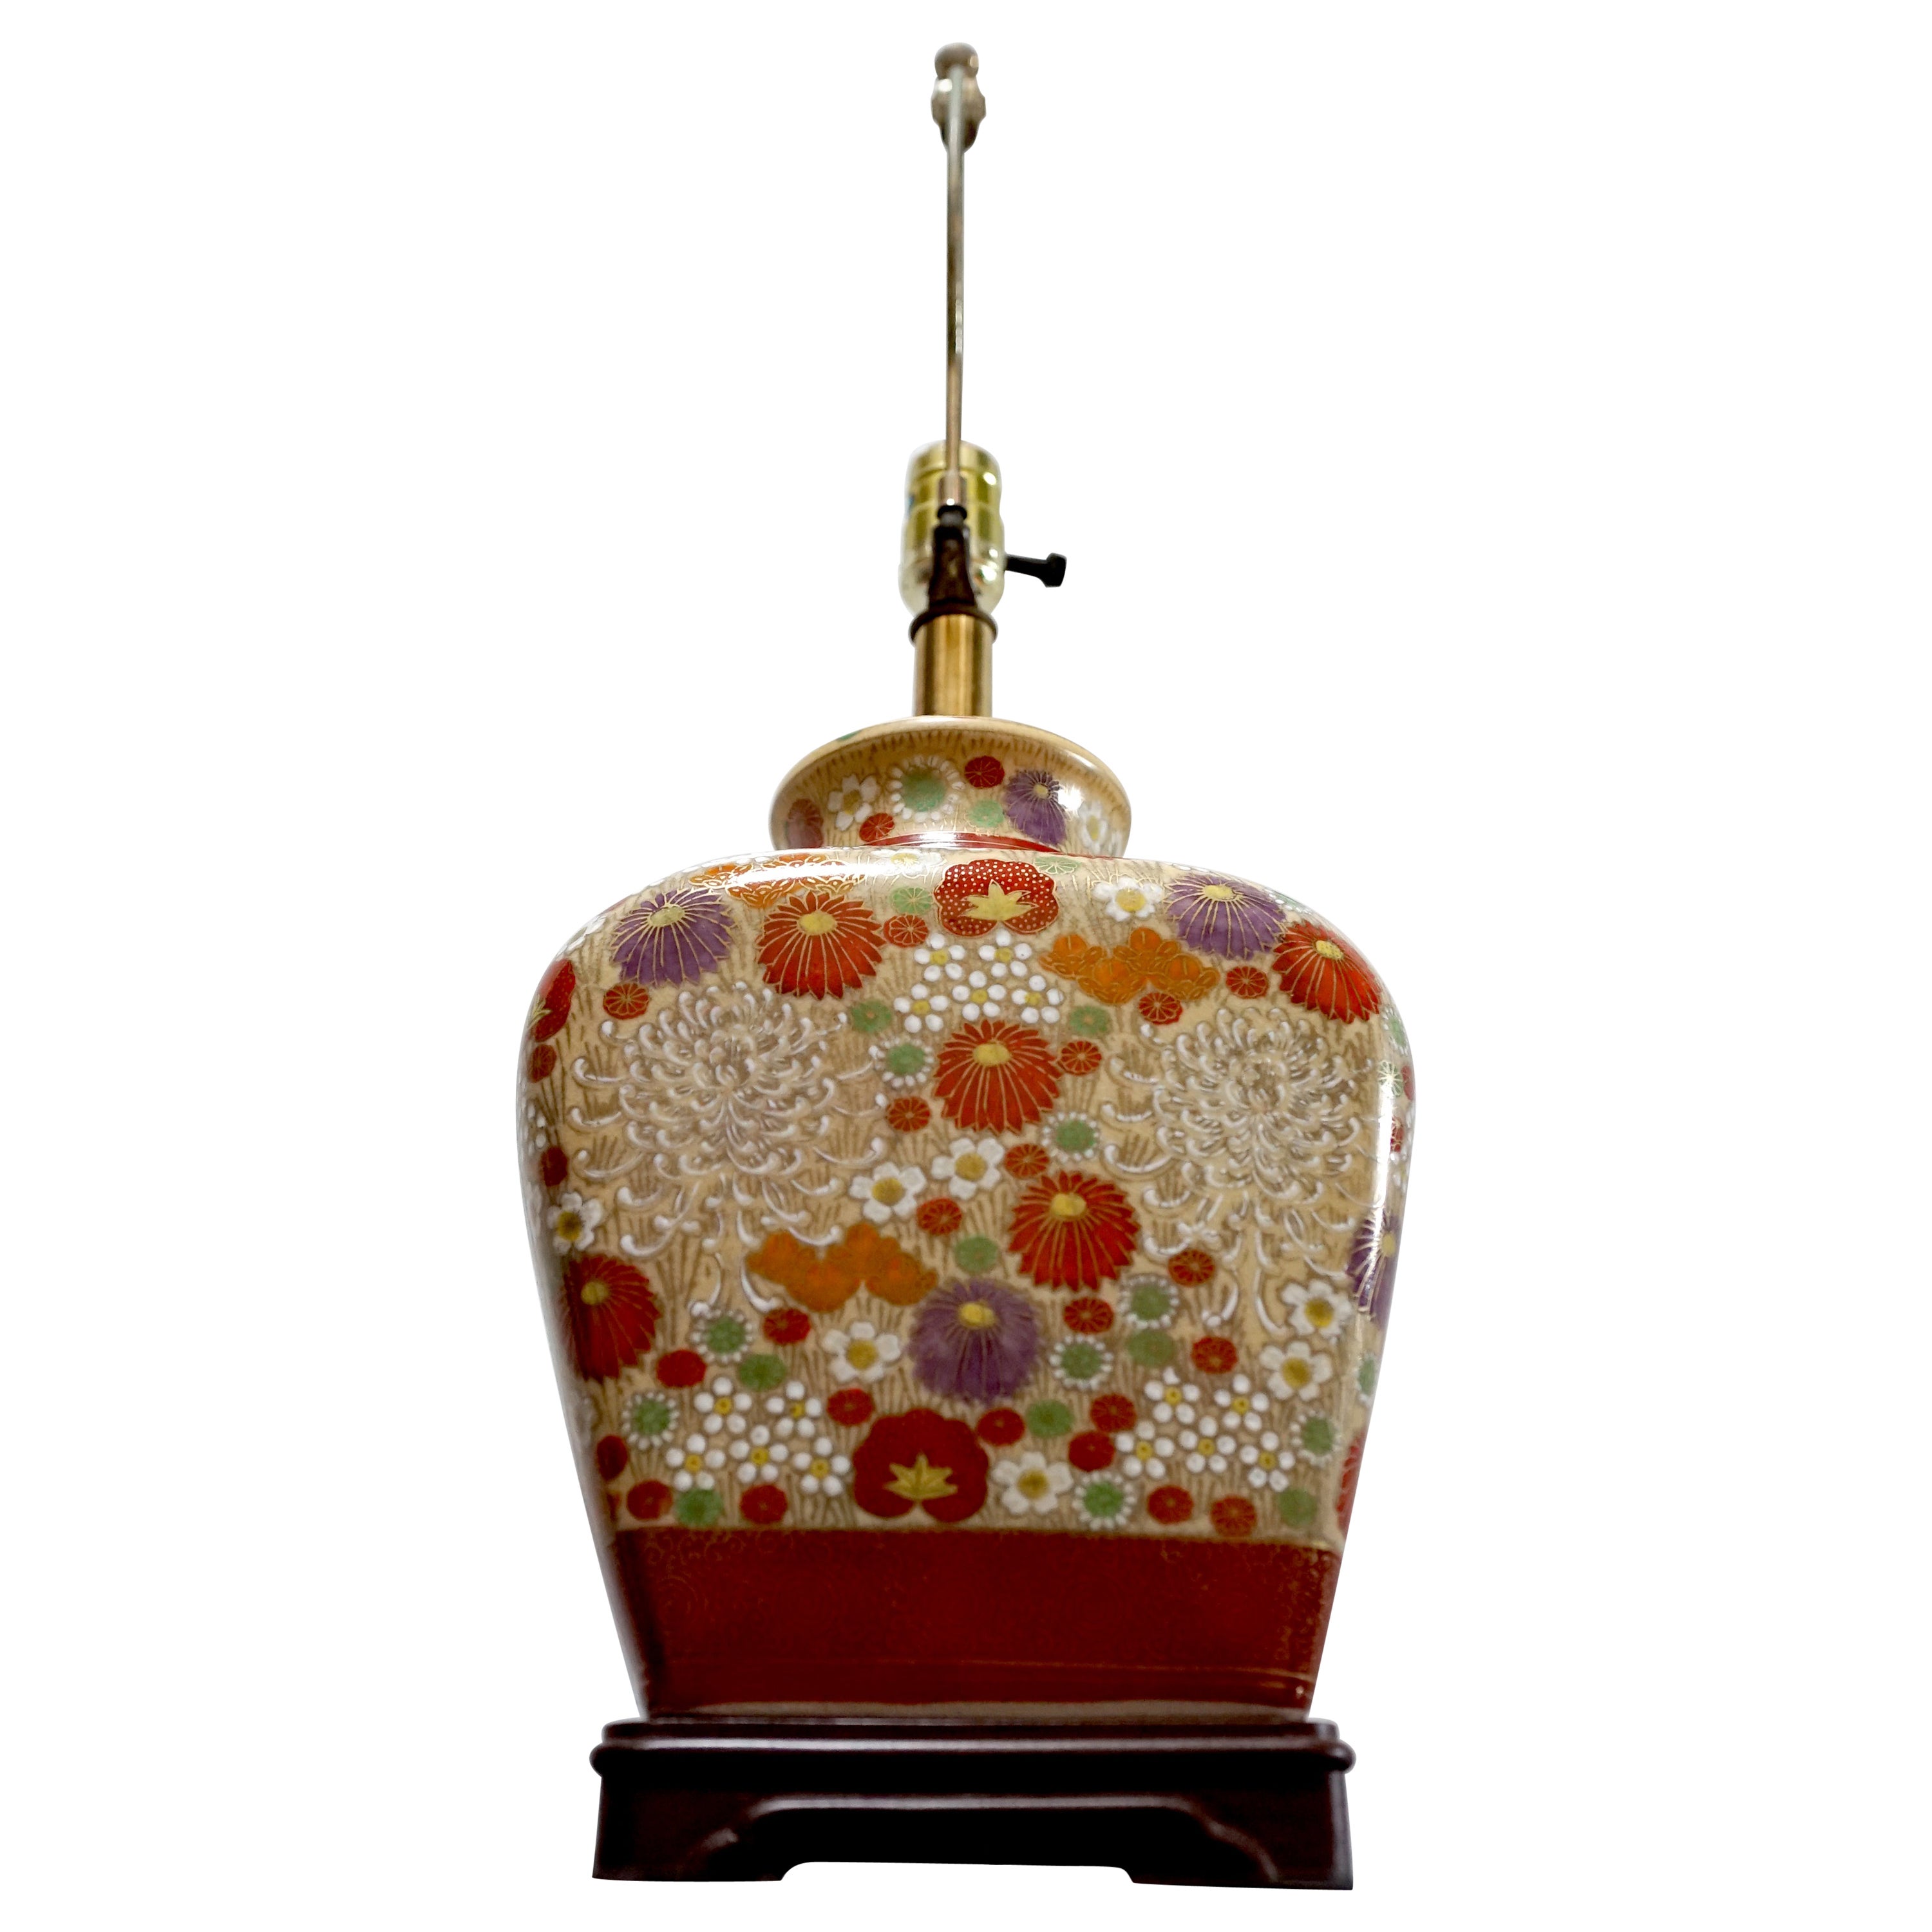 Asiatisch beeinflusste vergoldete Tischlampe mit Blumenpracht, Sockel aus Rosenholz